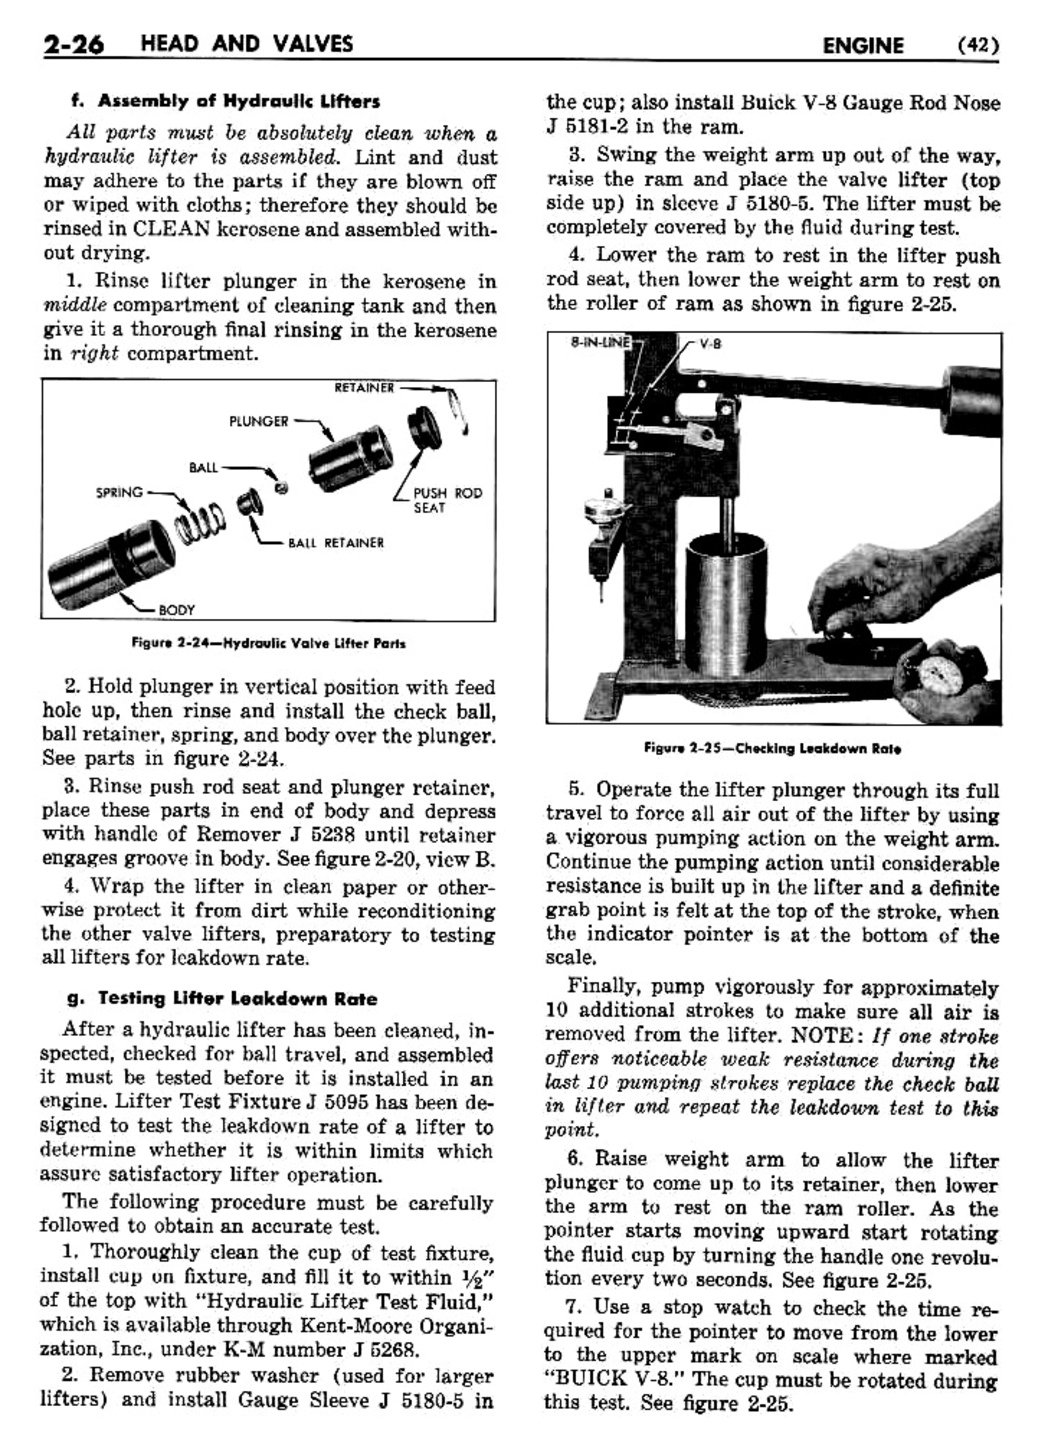 n_03 1955 Buick Shop Manual - Engine-026-026.jpg